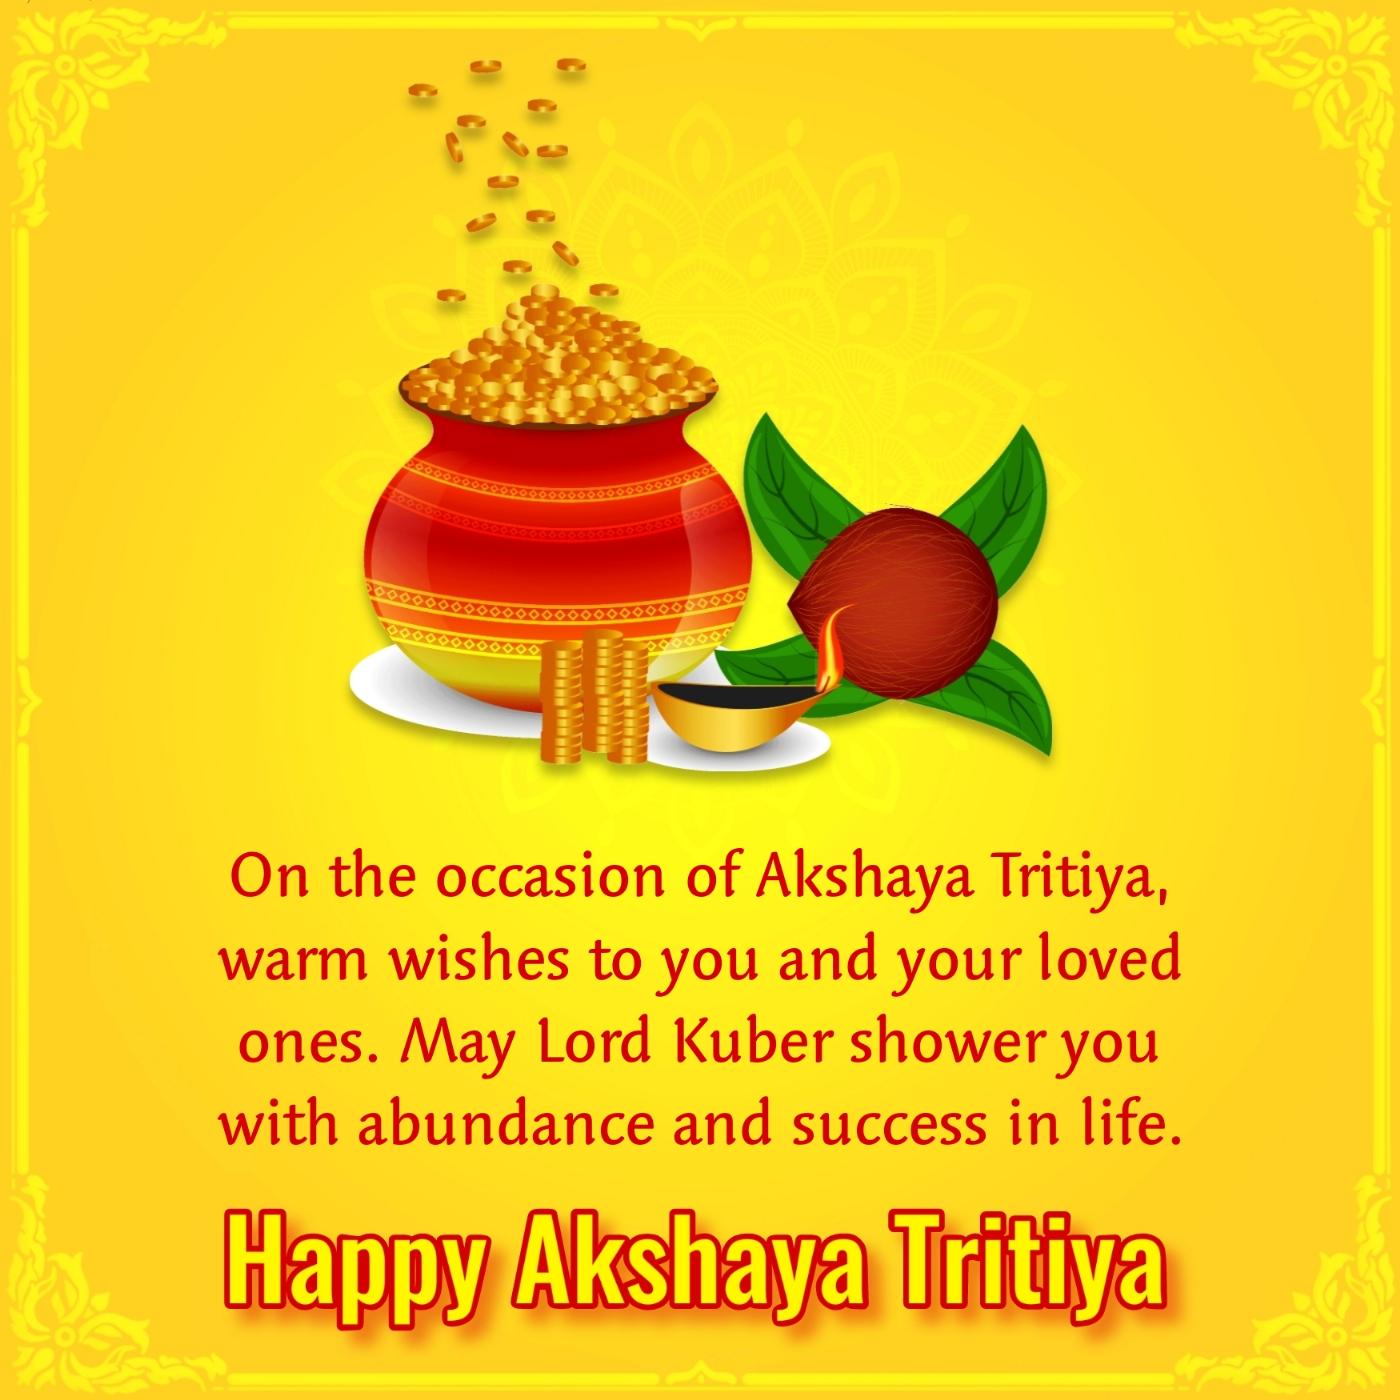 On the occasion of Akshaya Tritiya warm wishes to you